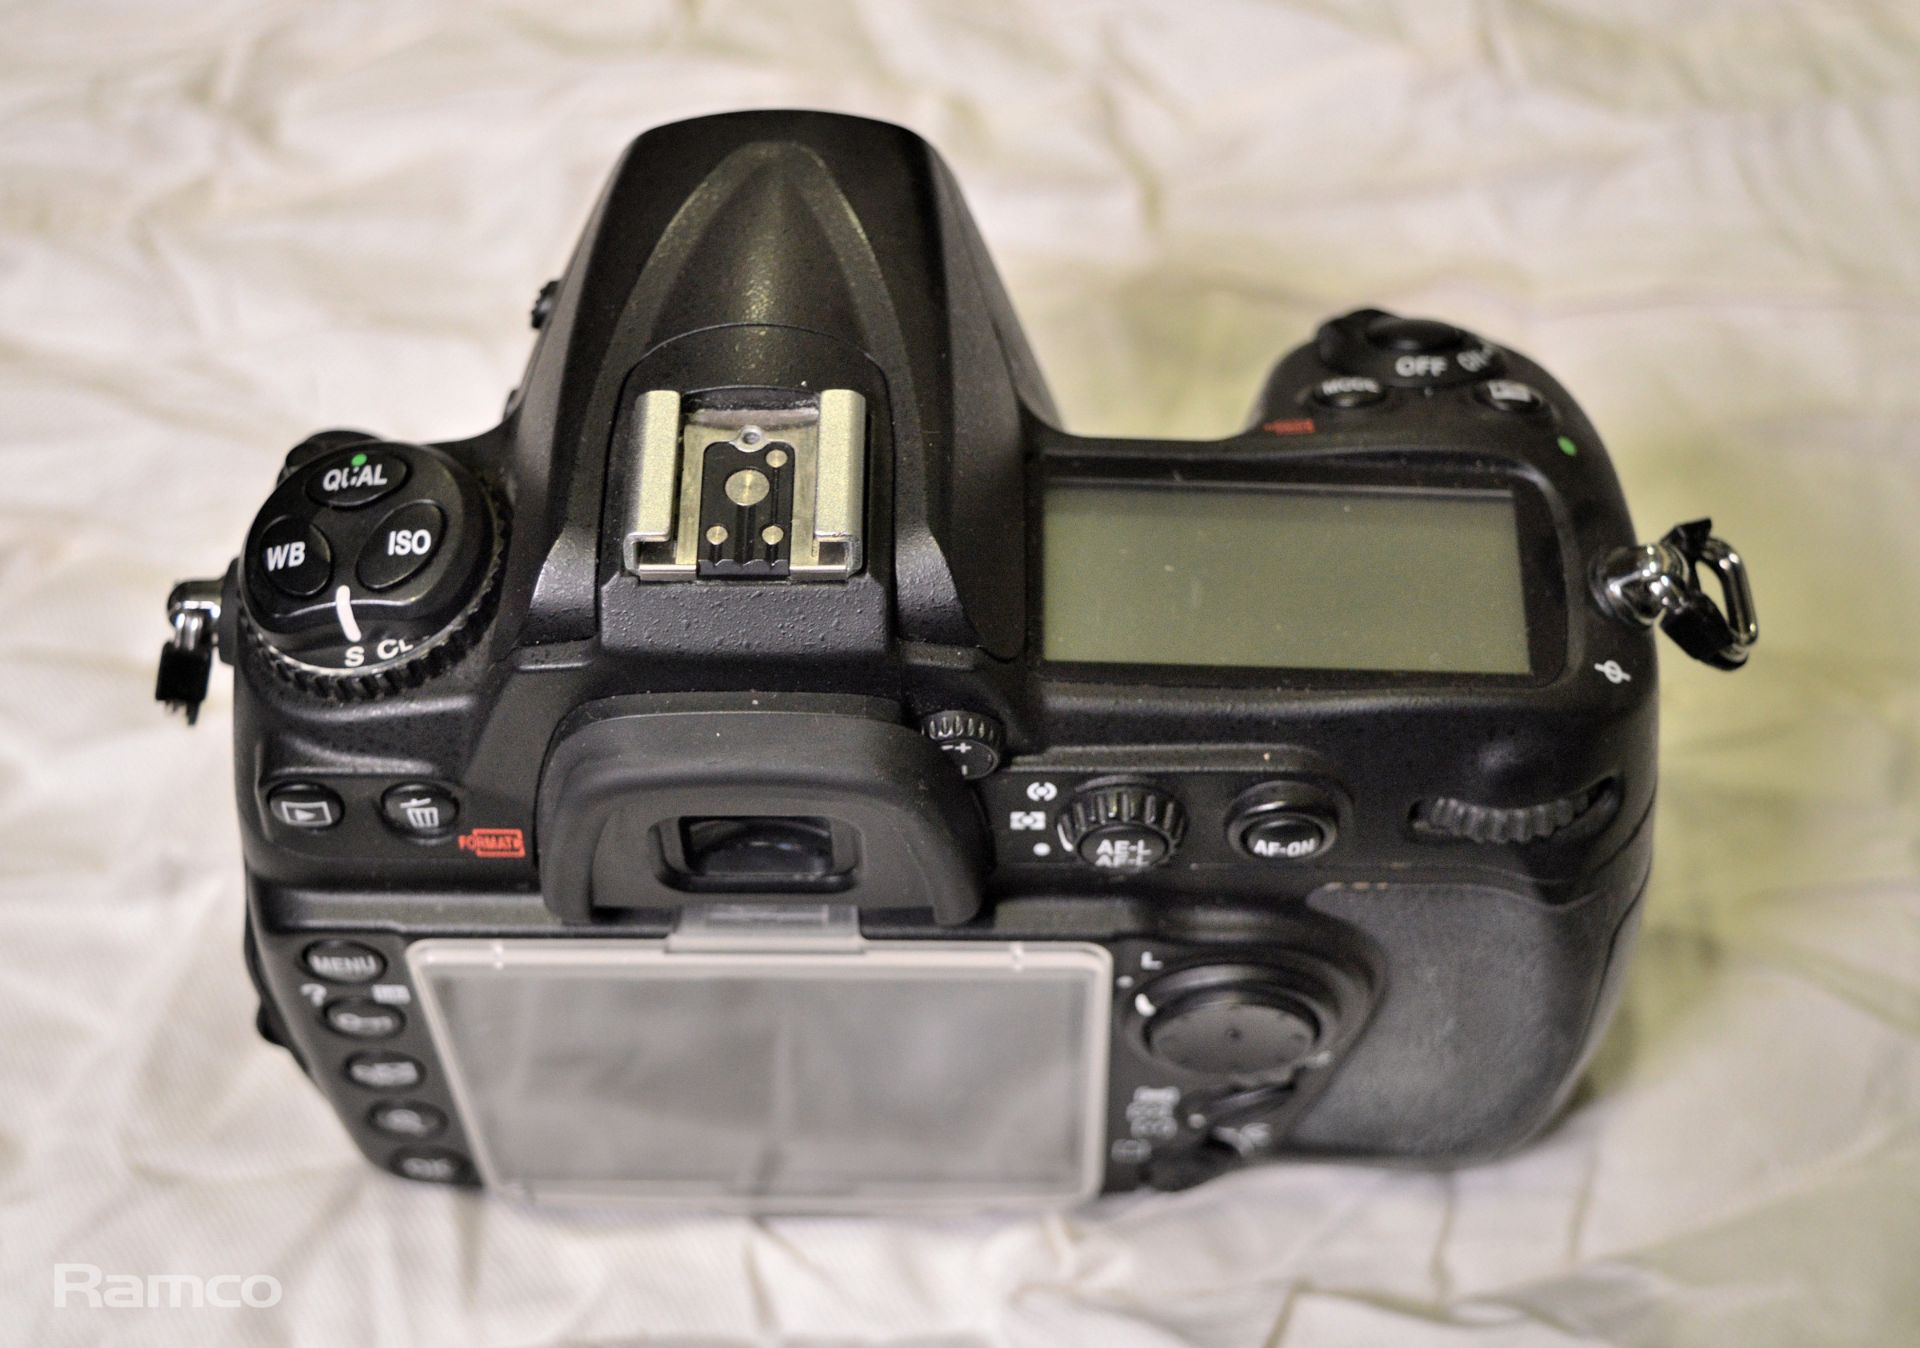 Nikon D300 SLR Digital Camera Body - Image 6 of 7